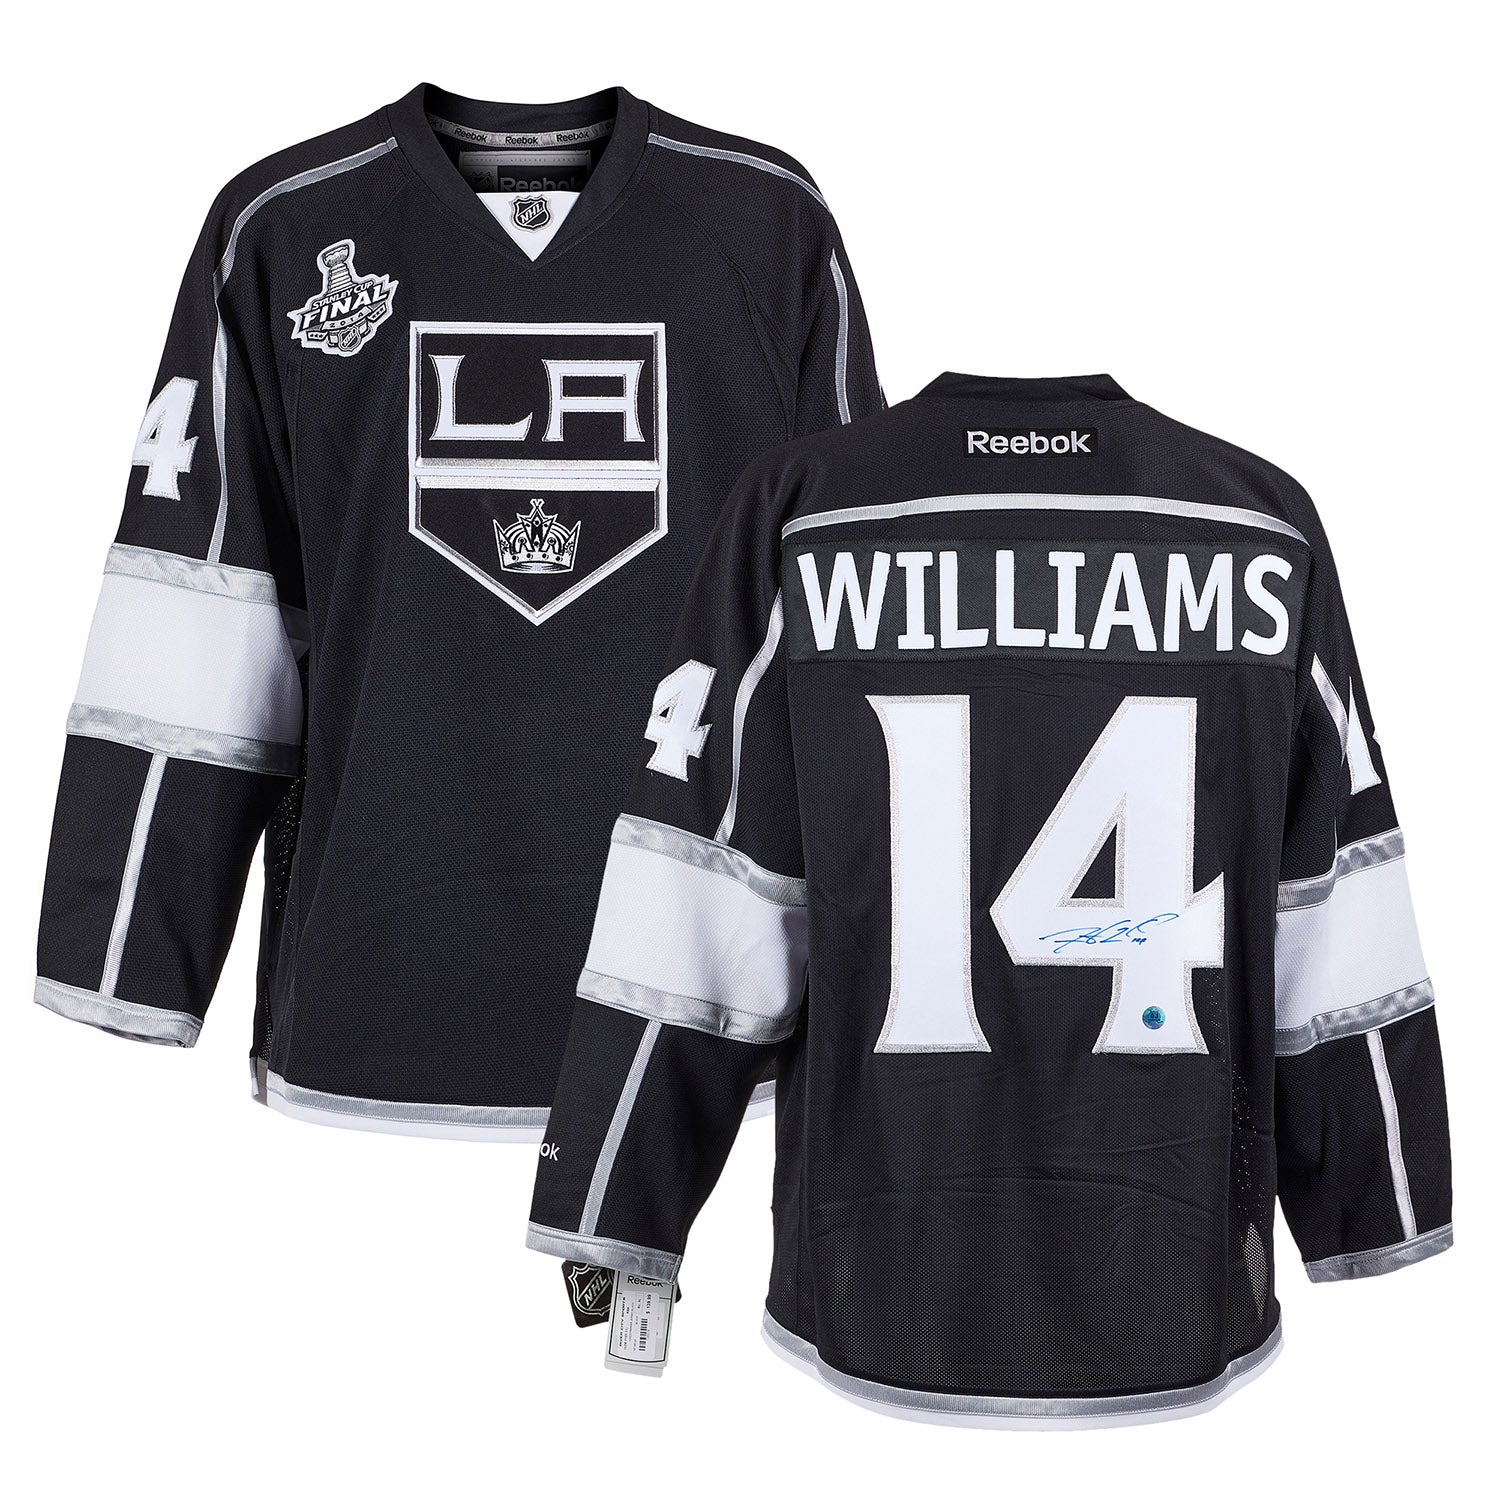 Justin Williams LA Kings Signed 2014 Stanley Cup Reebok Jersey